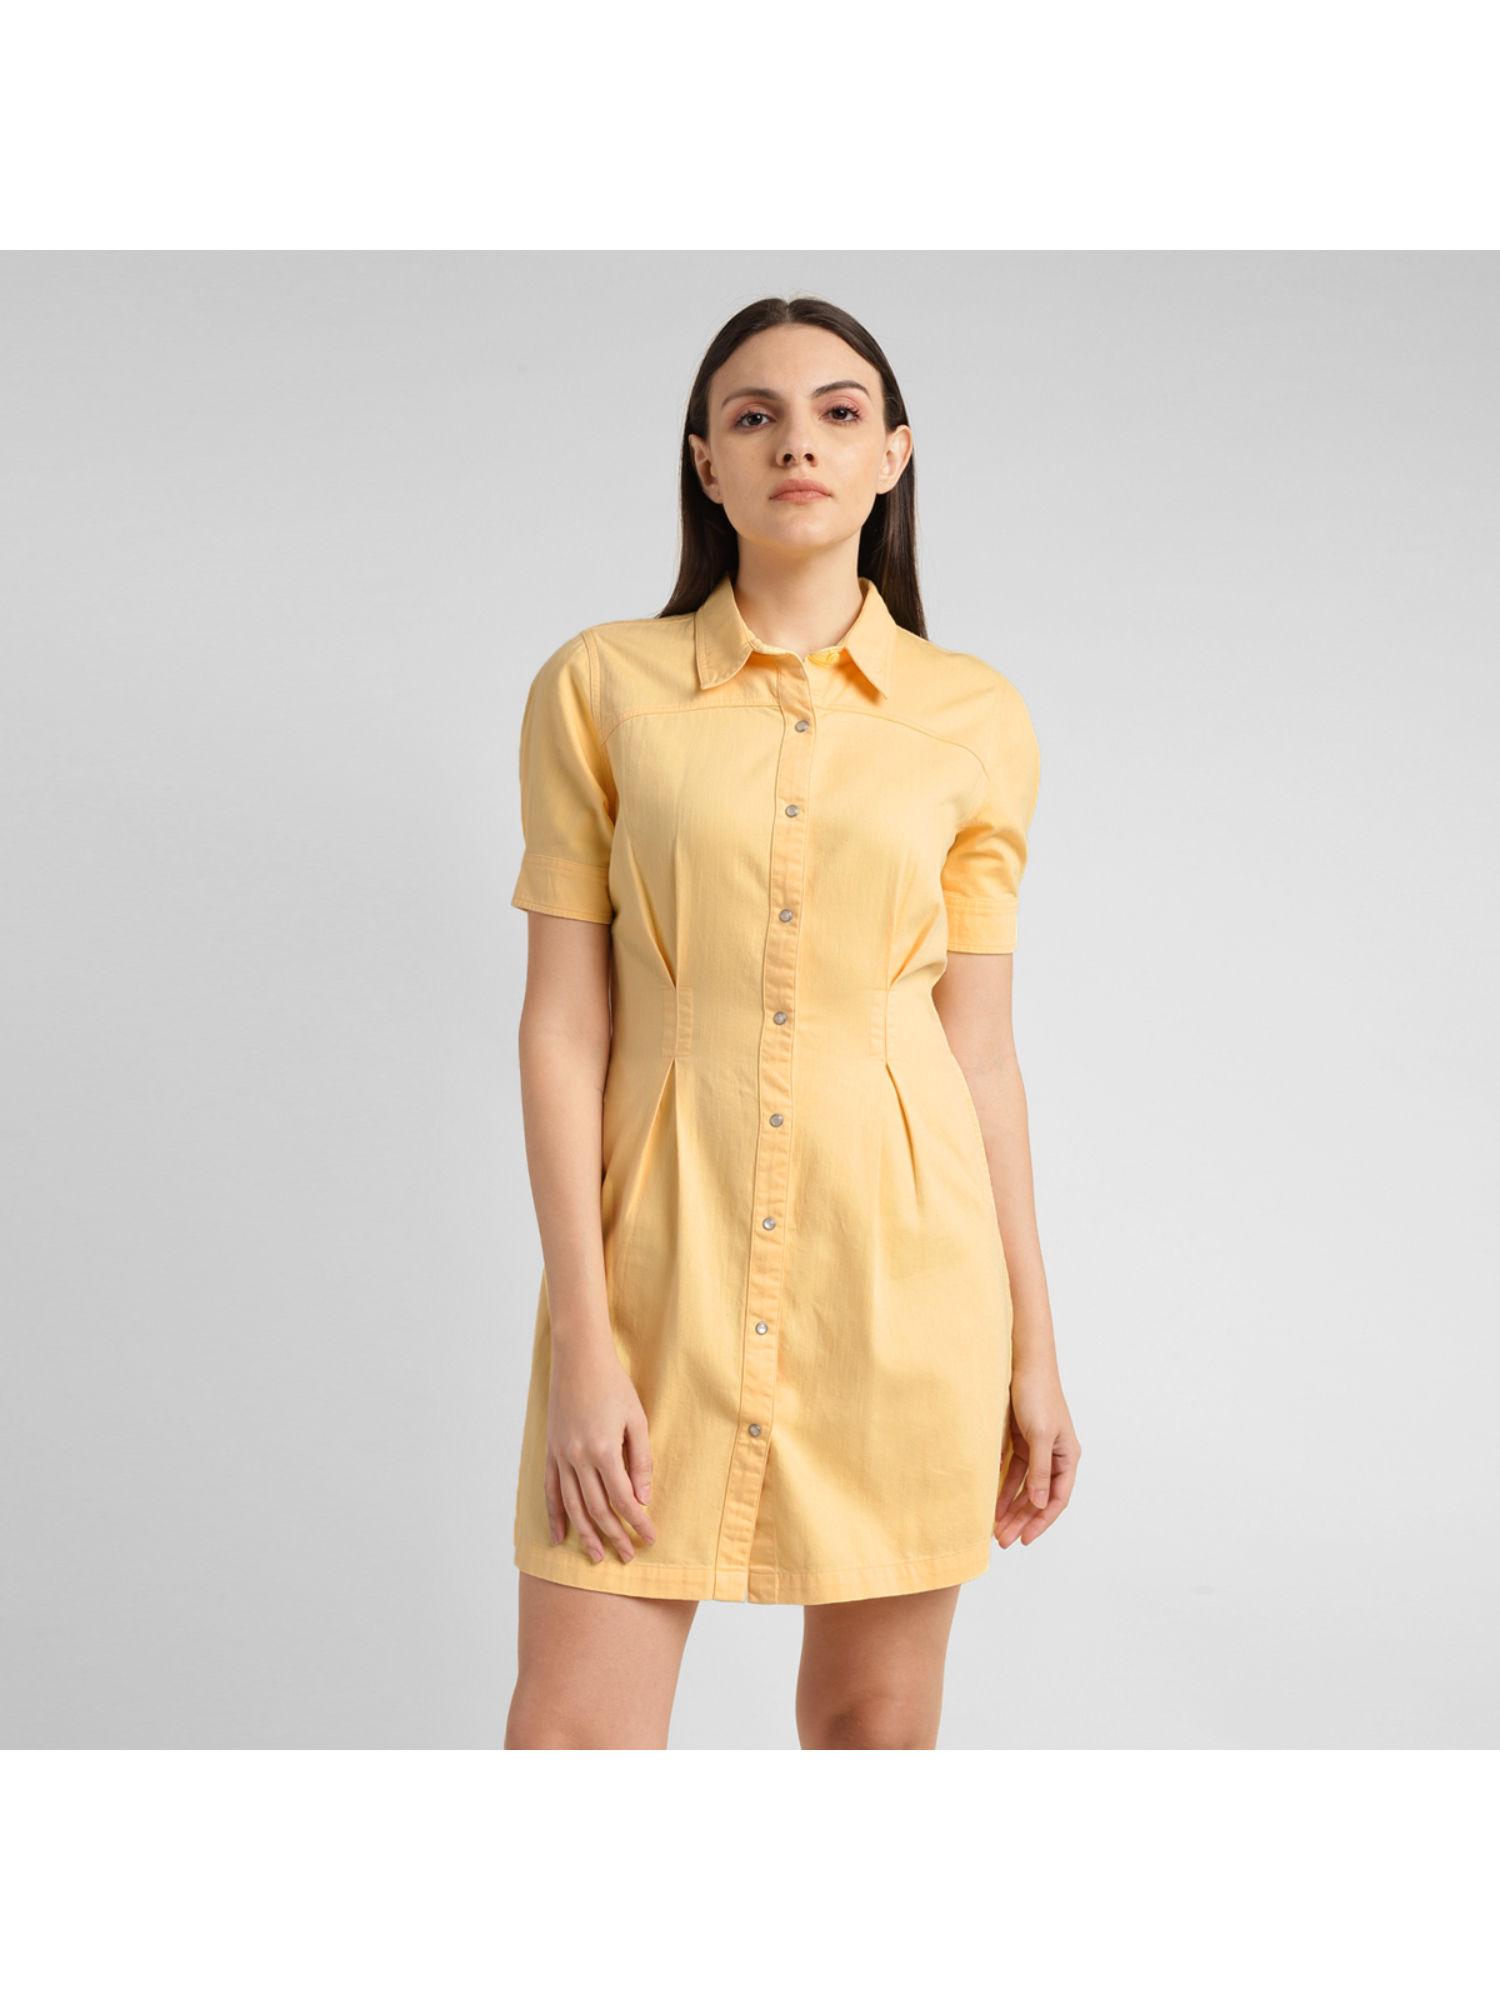 womens solid yellow spread collar dress